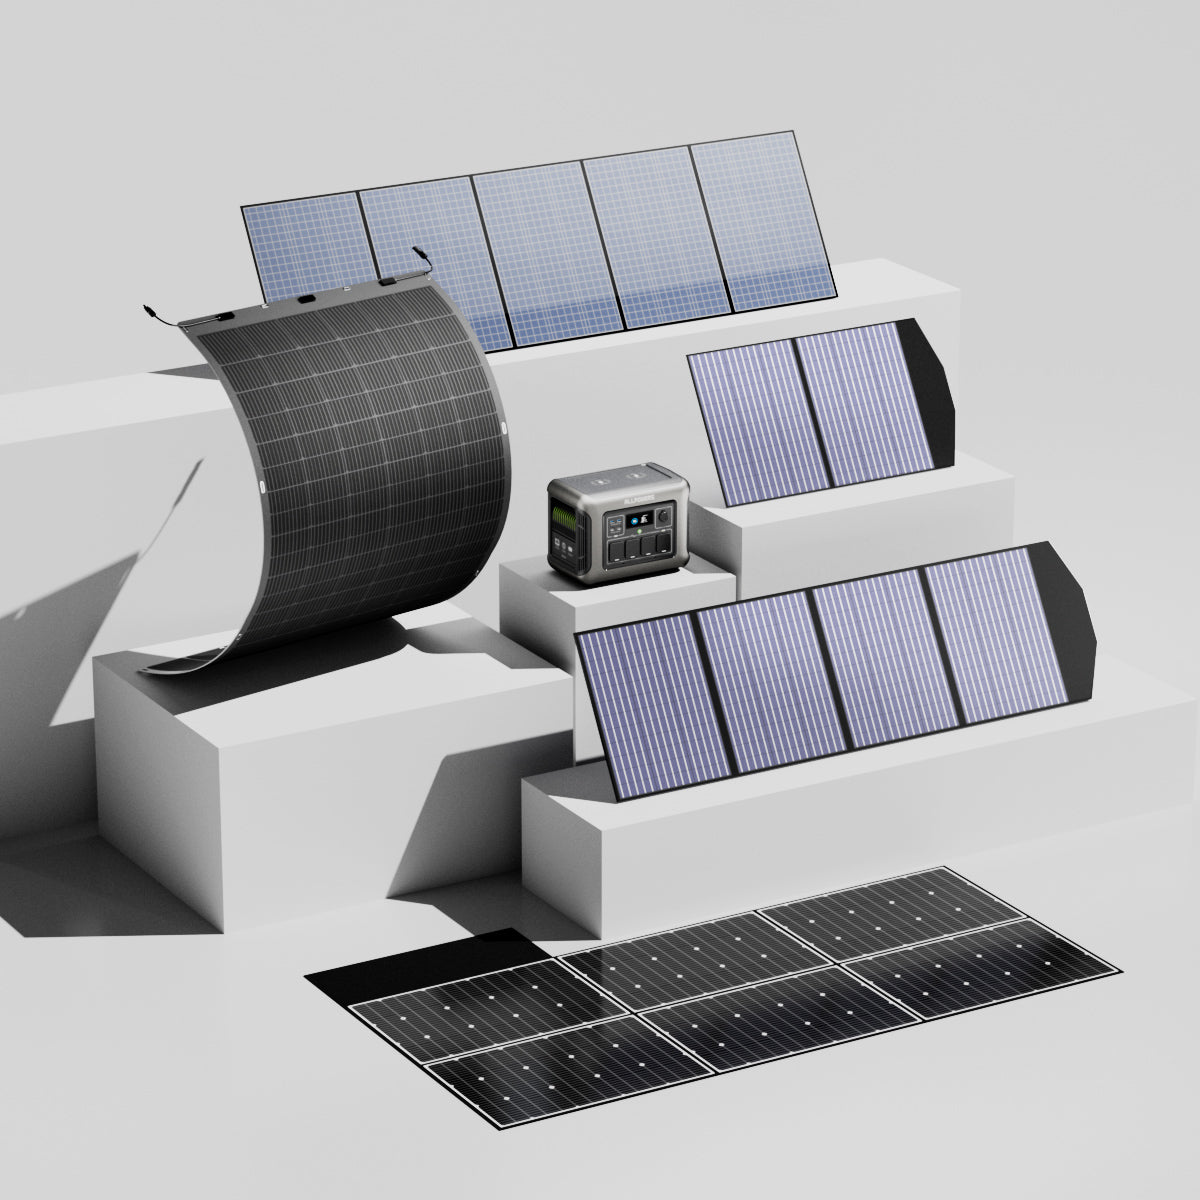 r1500-1800w-power-station-with-solar-panels.jpg